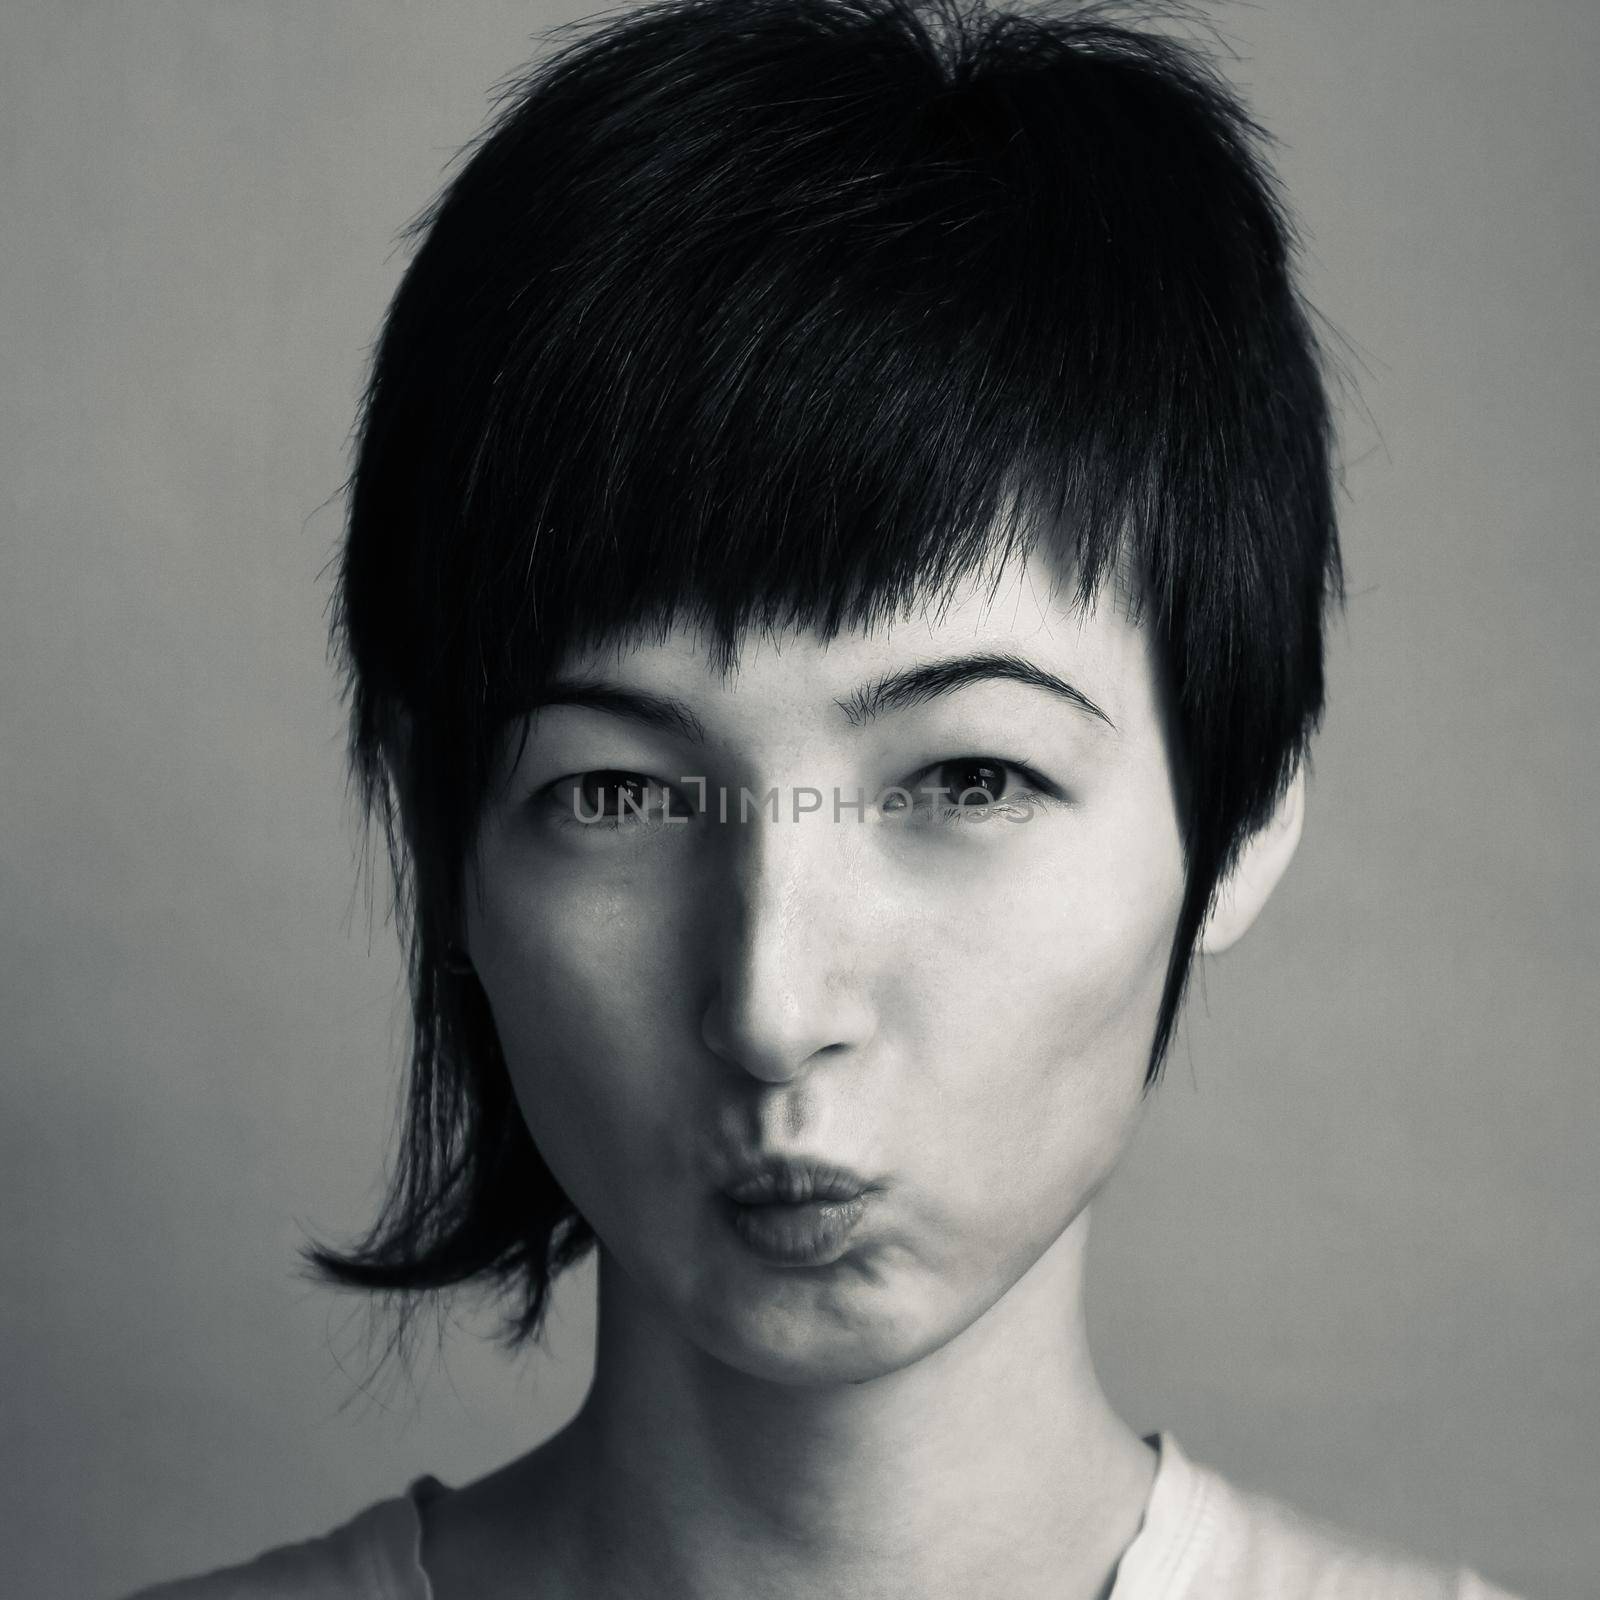 Portrait of a young woman, monochrome